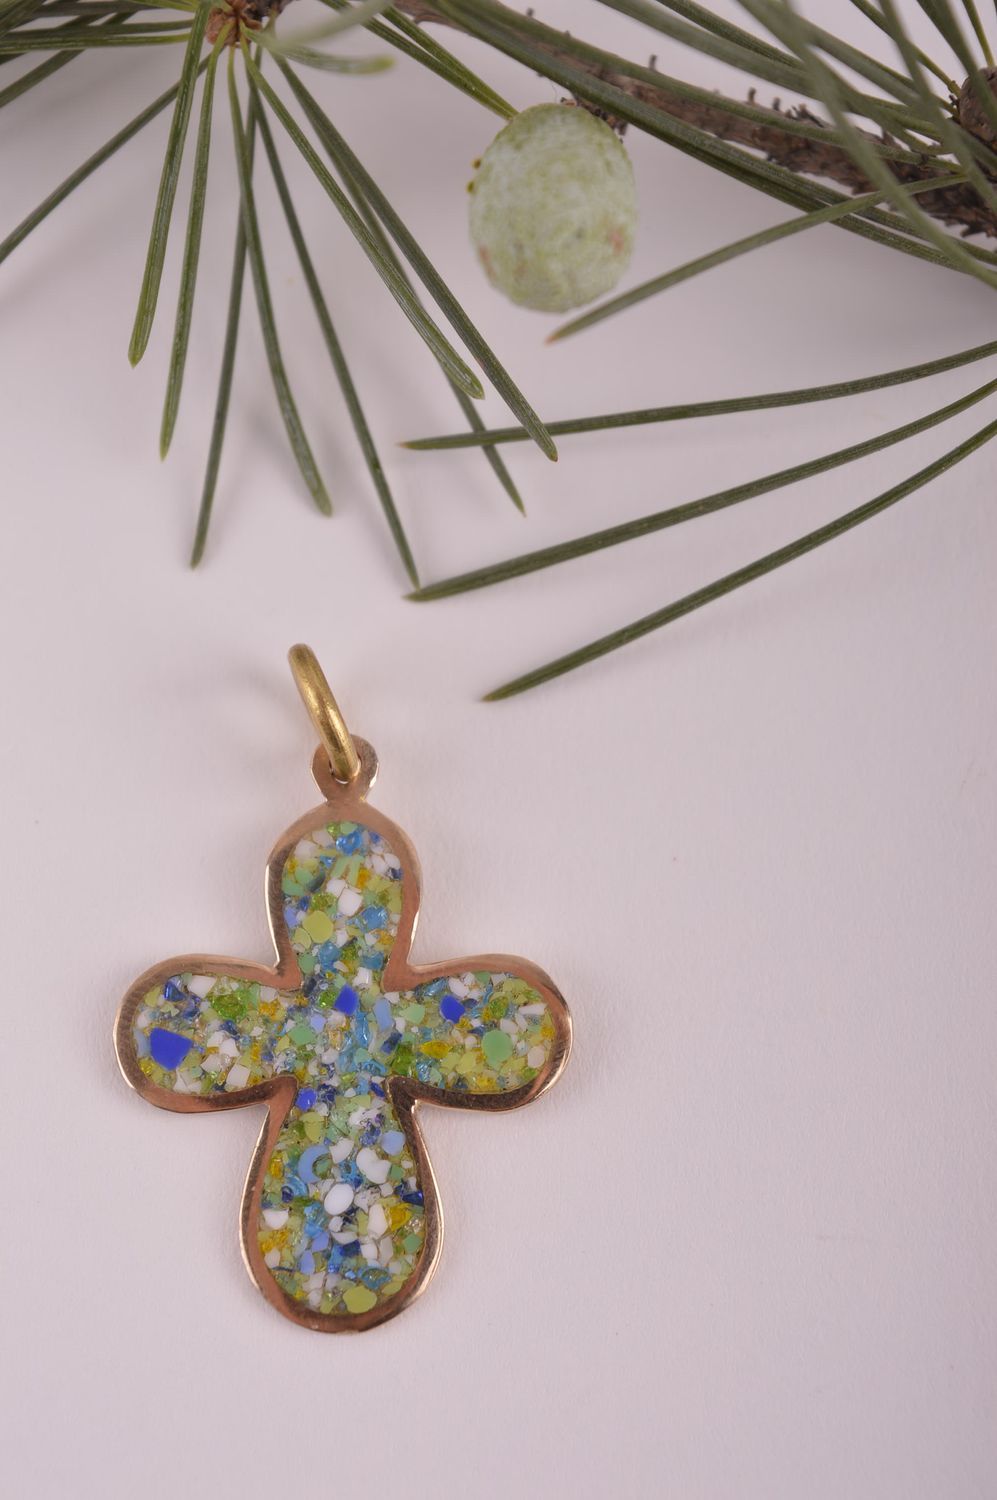 Stylish handmade metal cross pendant with natural stones gemstone pendant photo 1